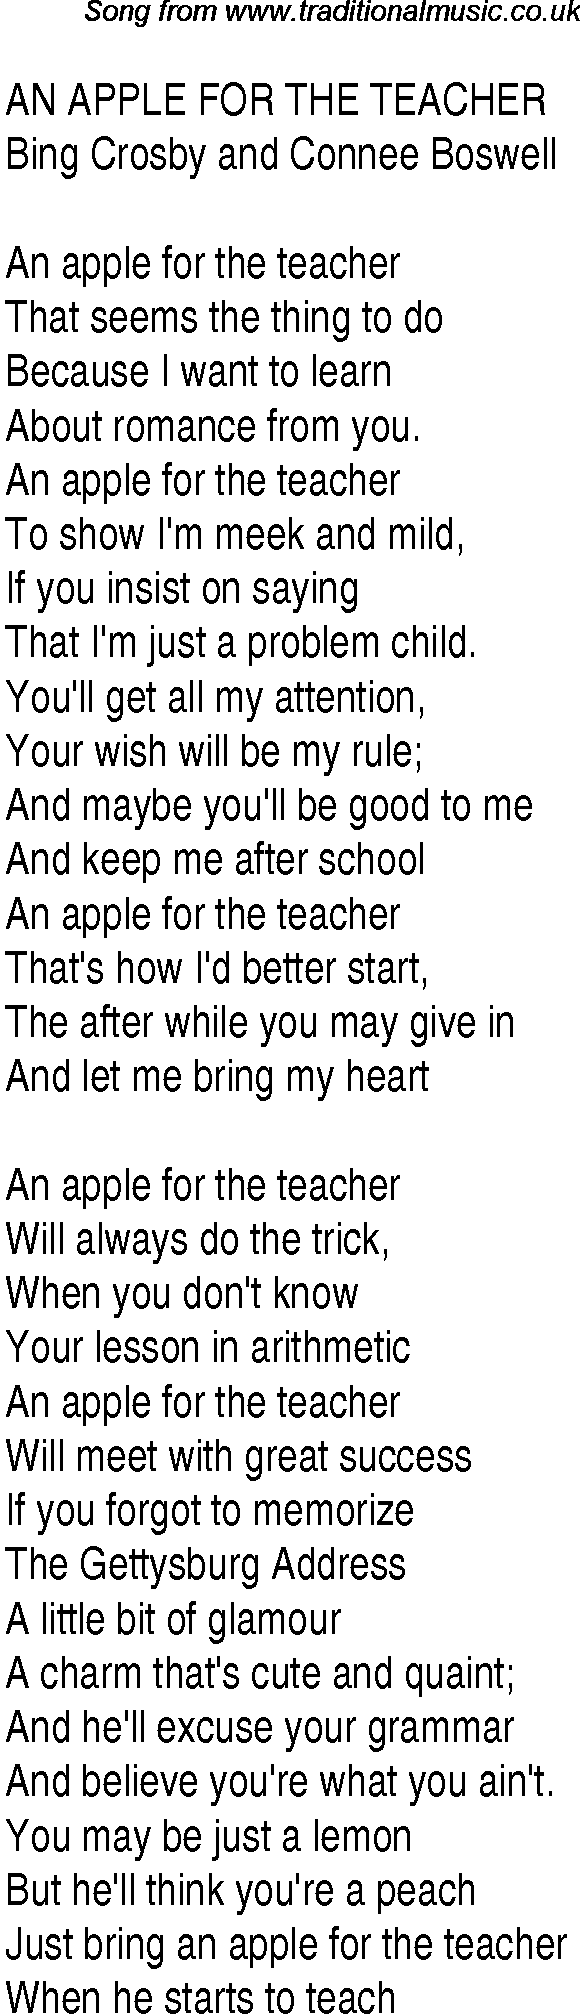 Music charts top songs 1939 - lyrics for An Apple For The Teacher